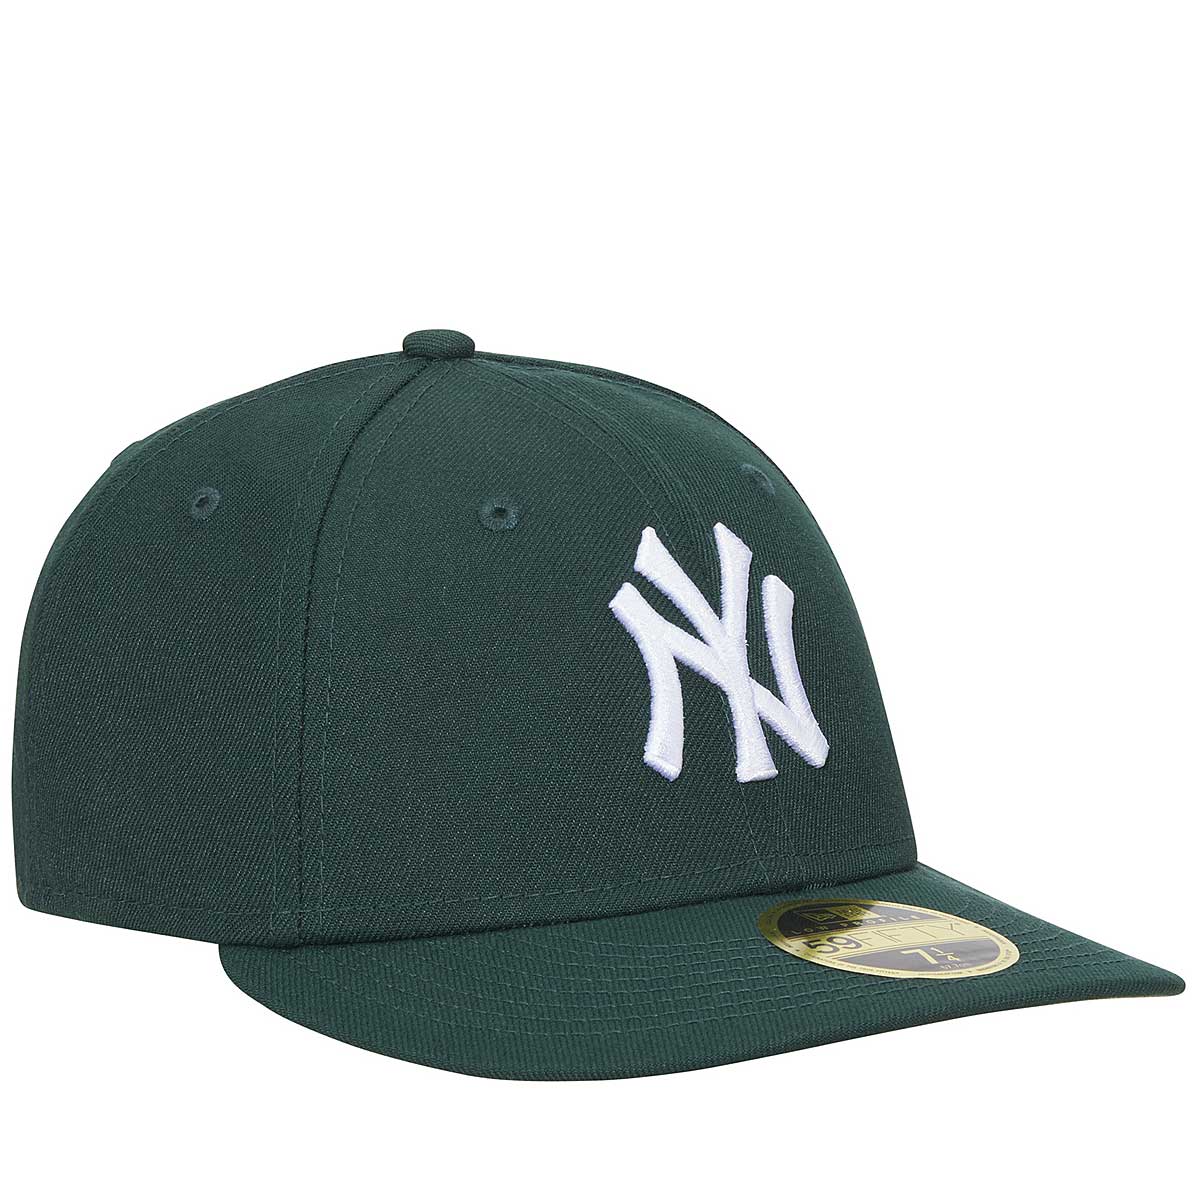 Buy MLB NEW YORK YANKEES LP59FIFTY CAP for EUR 19.90 on KICKZ.com!